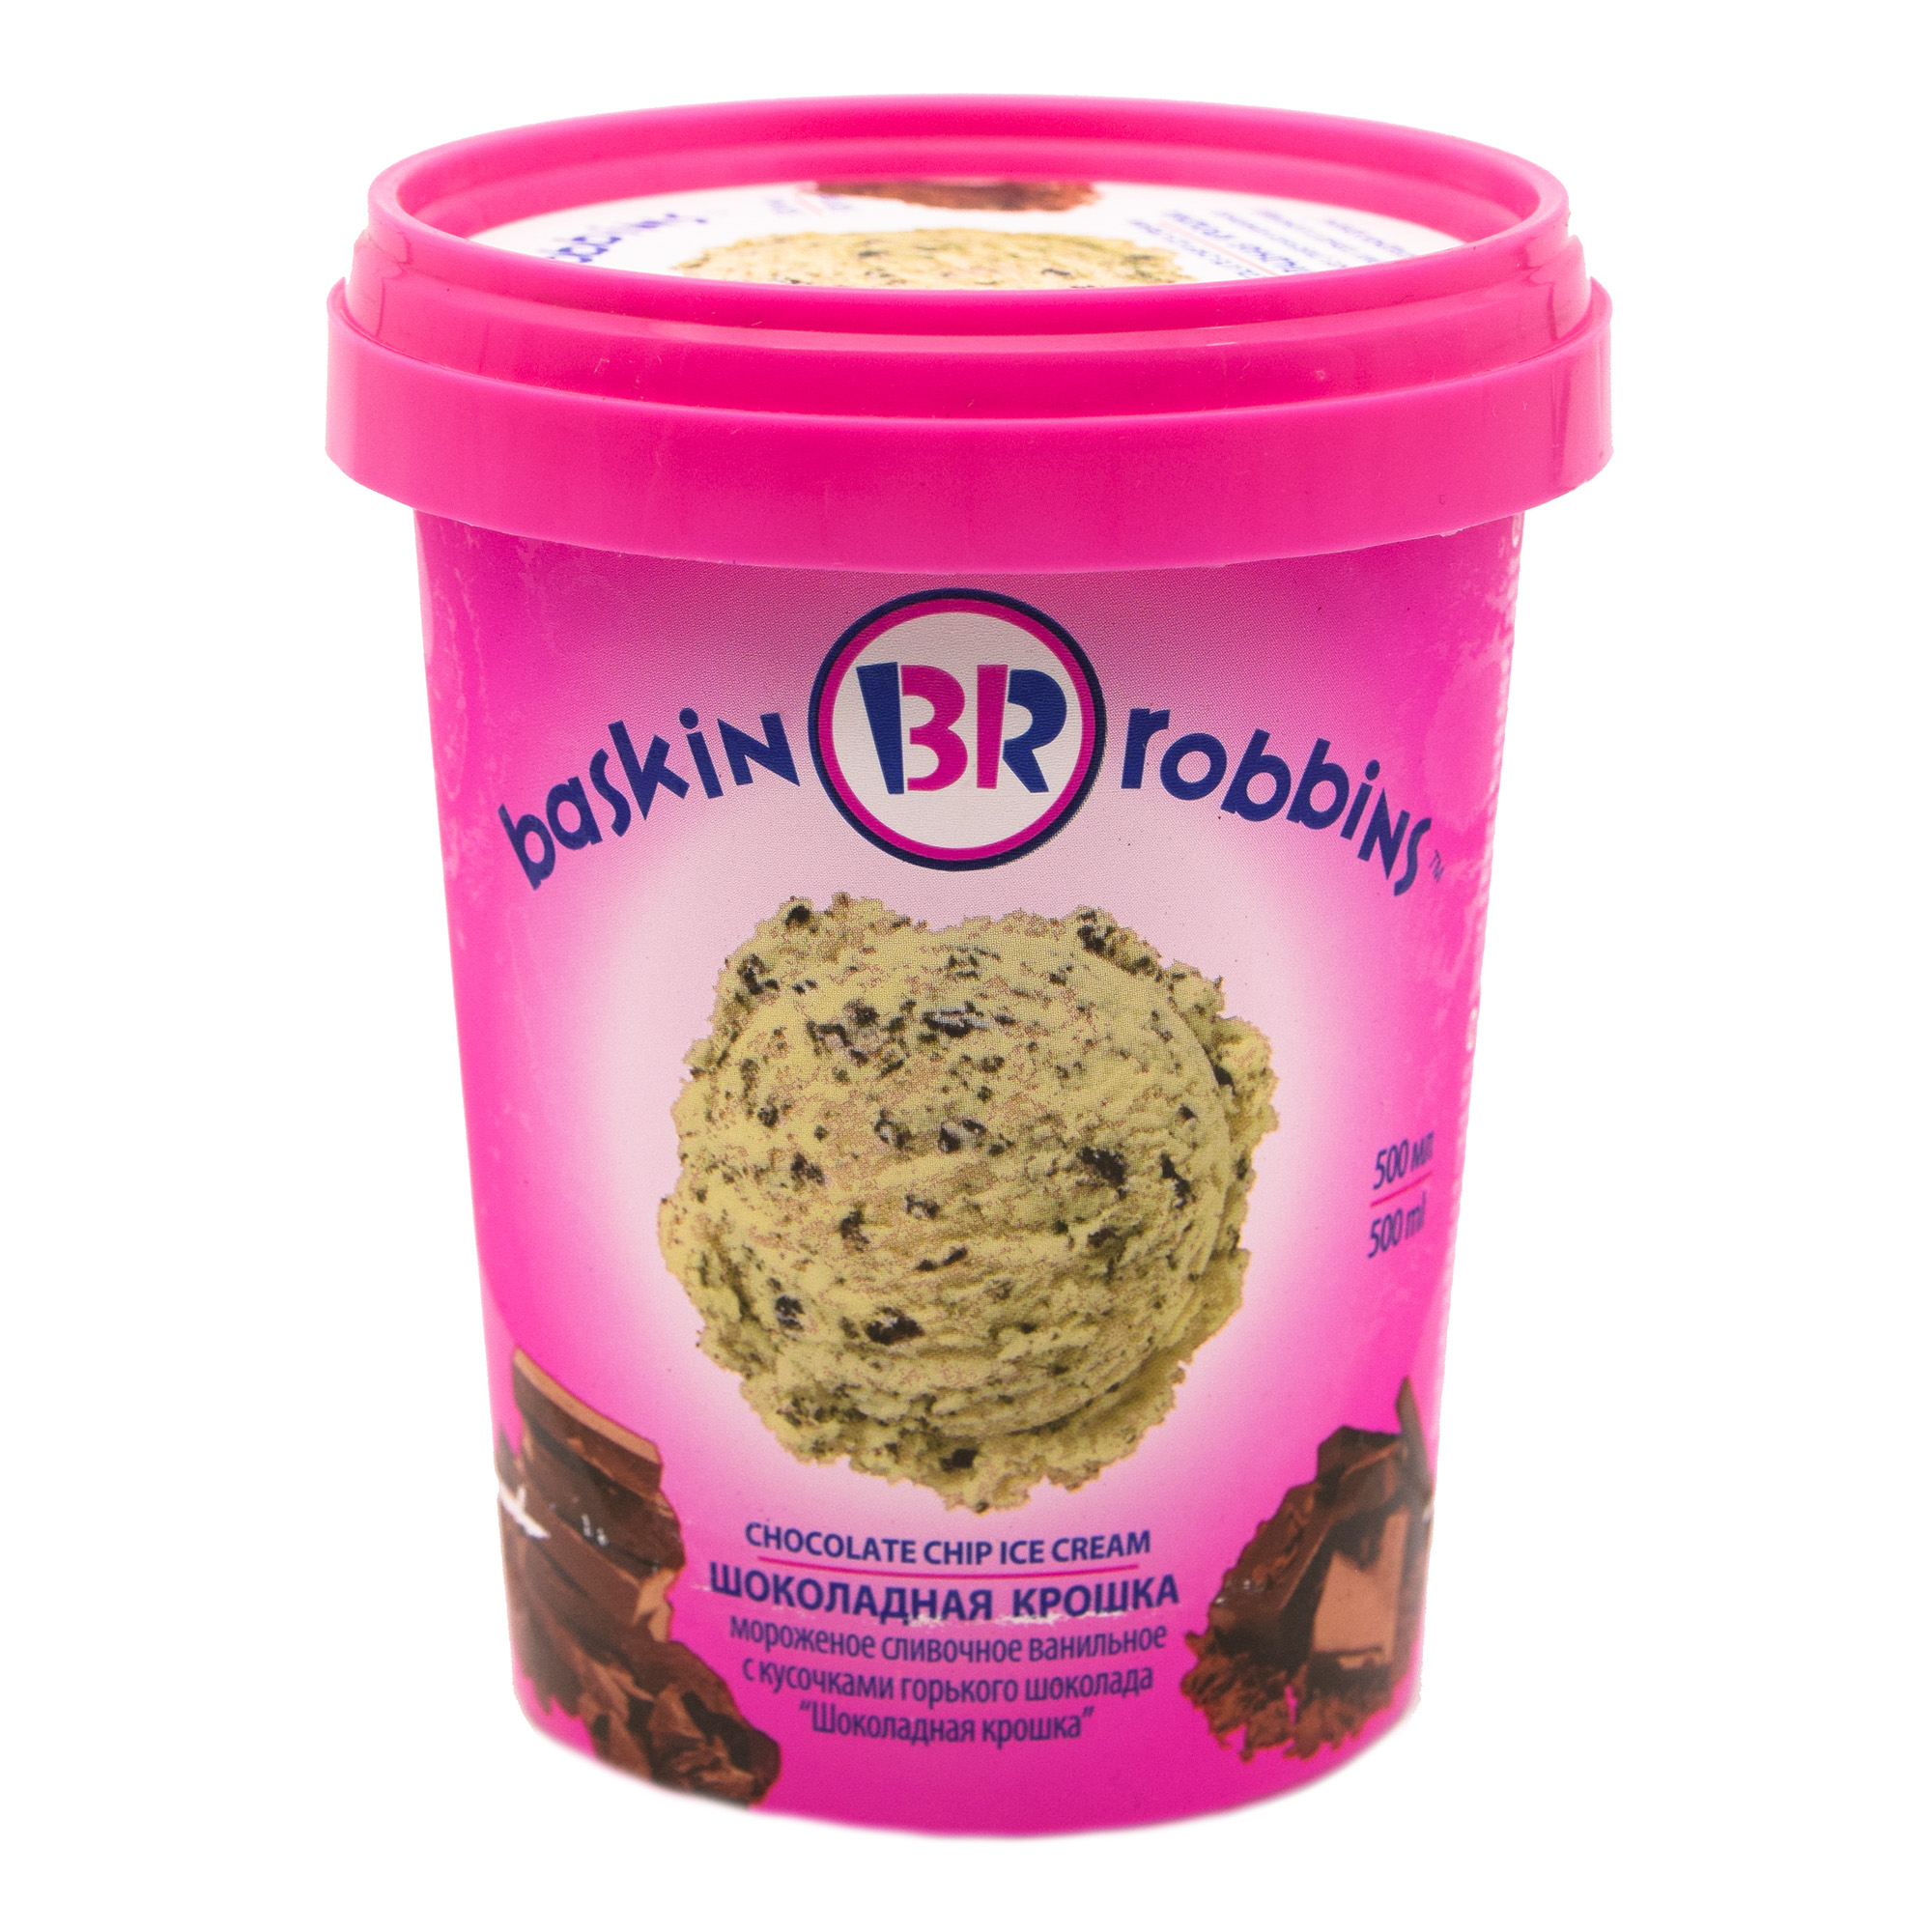 Мороженое сливочное Baskin Robbins Шоколадная крошка бзмж 300 гр